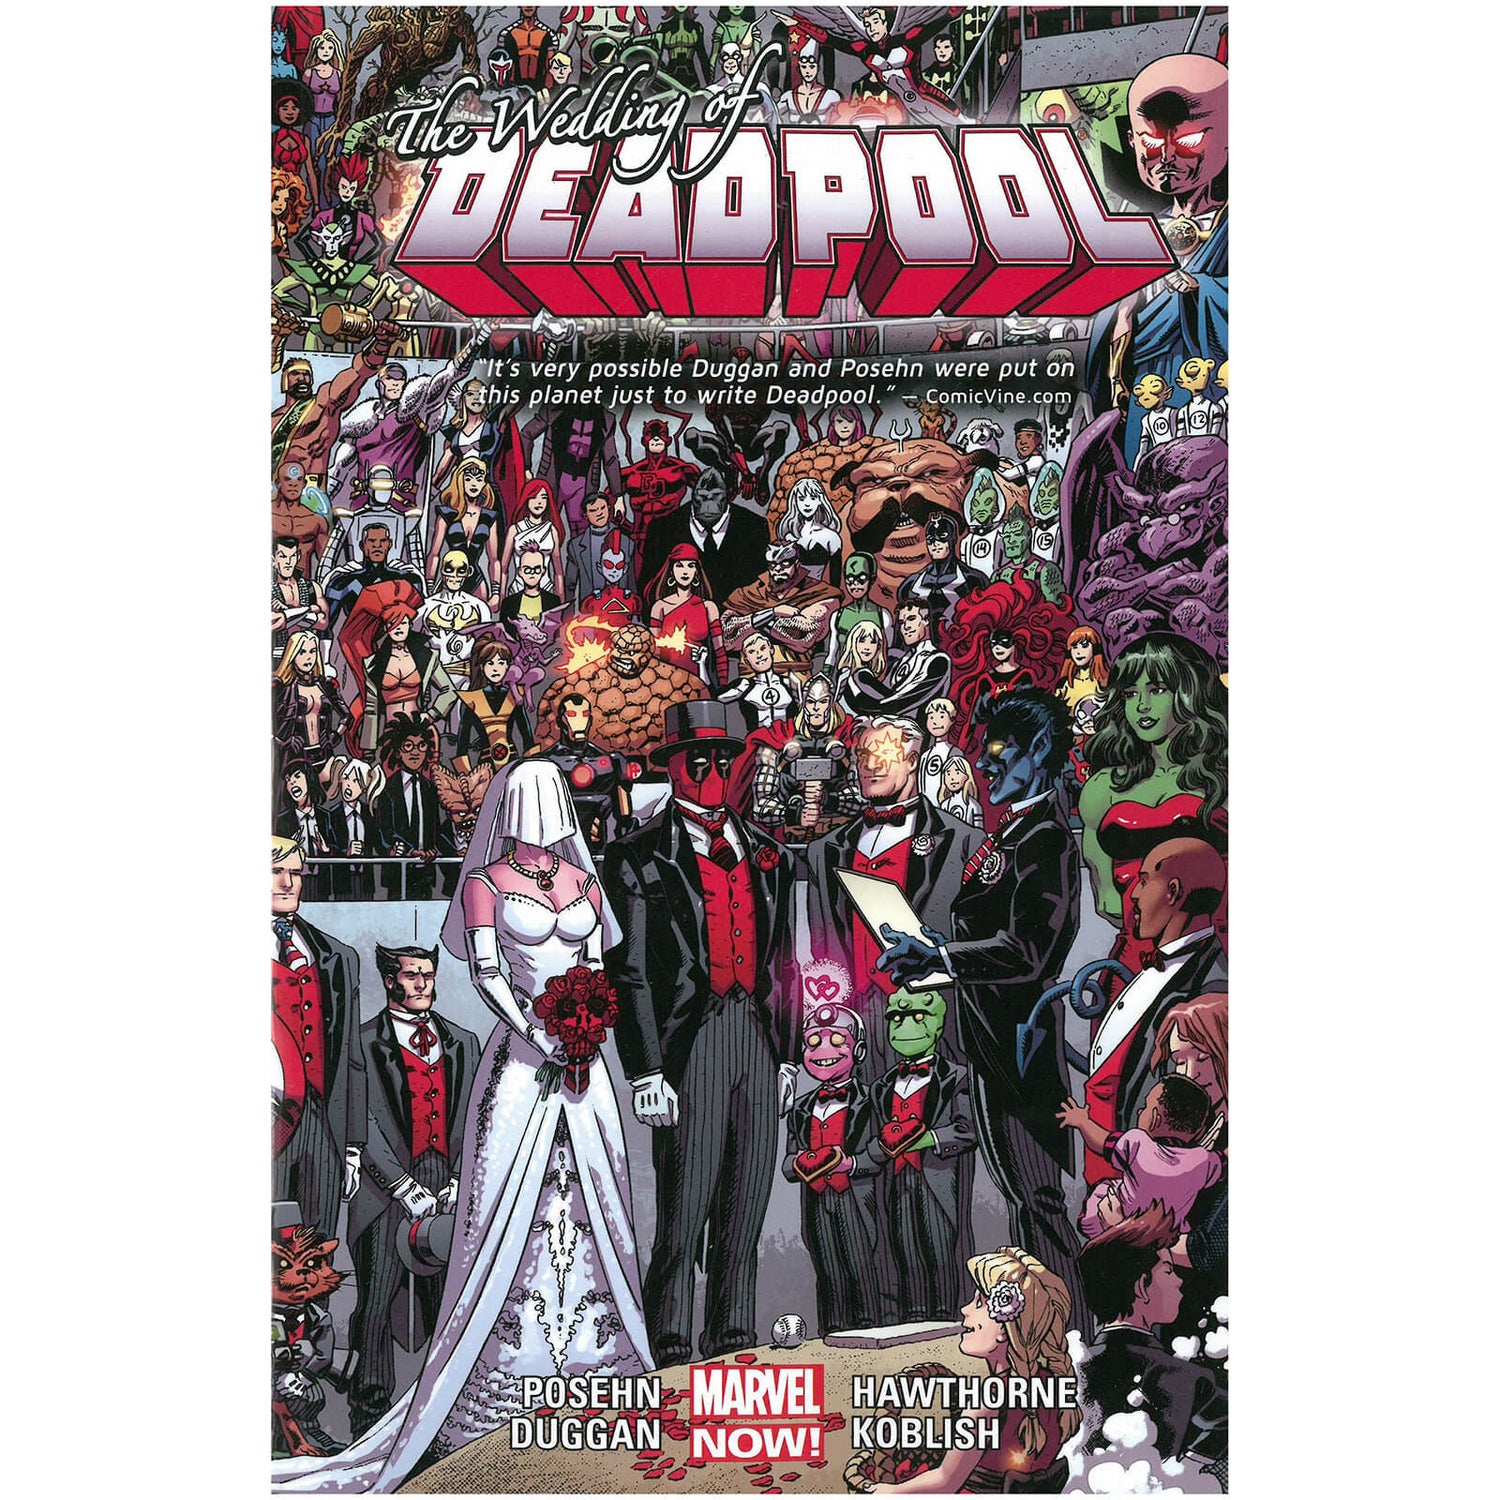 Marvel Now Deadpool: Wedding of Deadpool - Volume 5 Graphic Novel